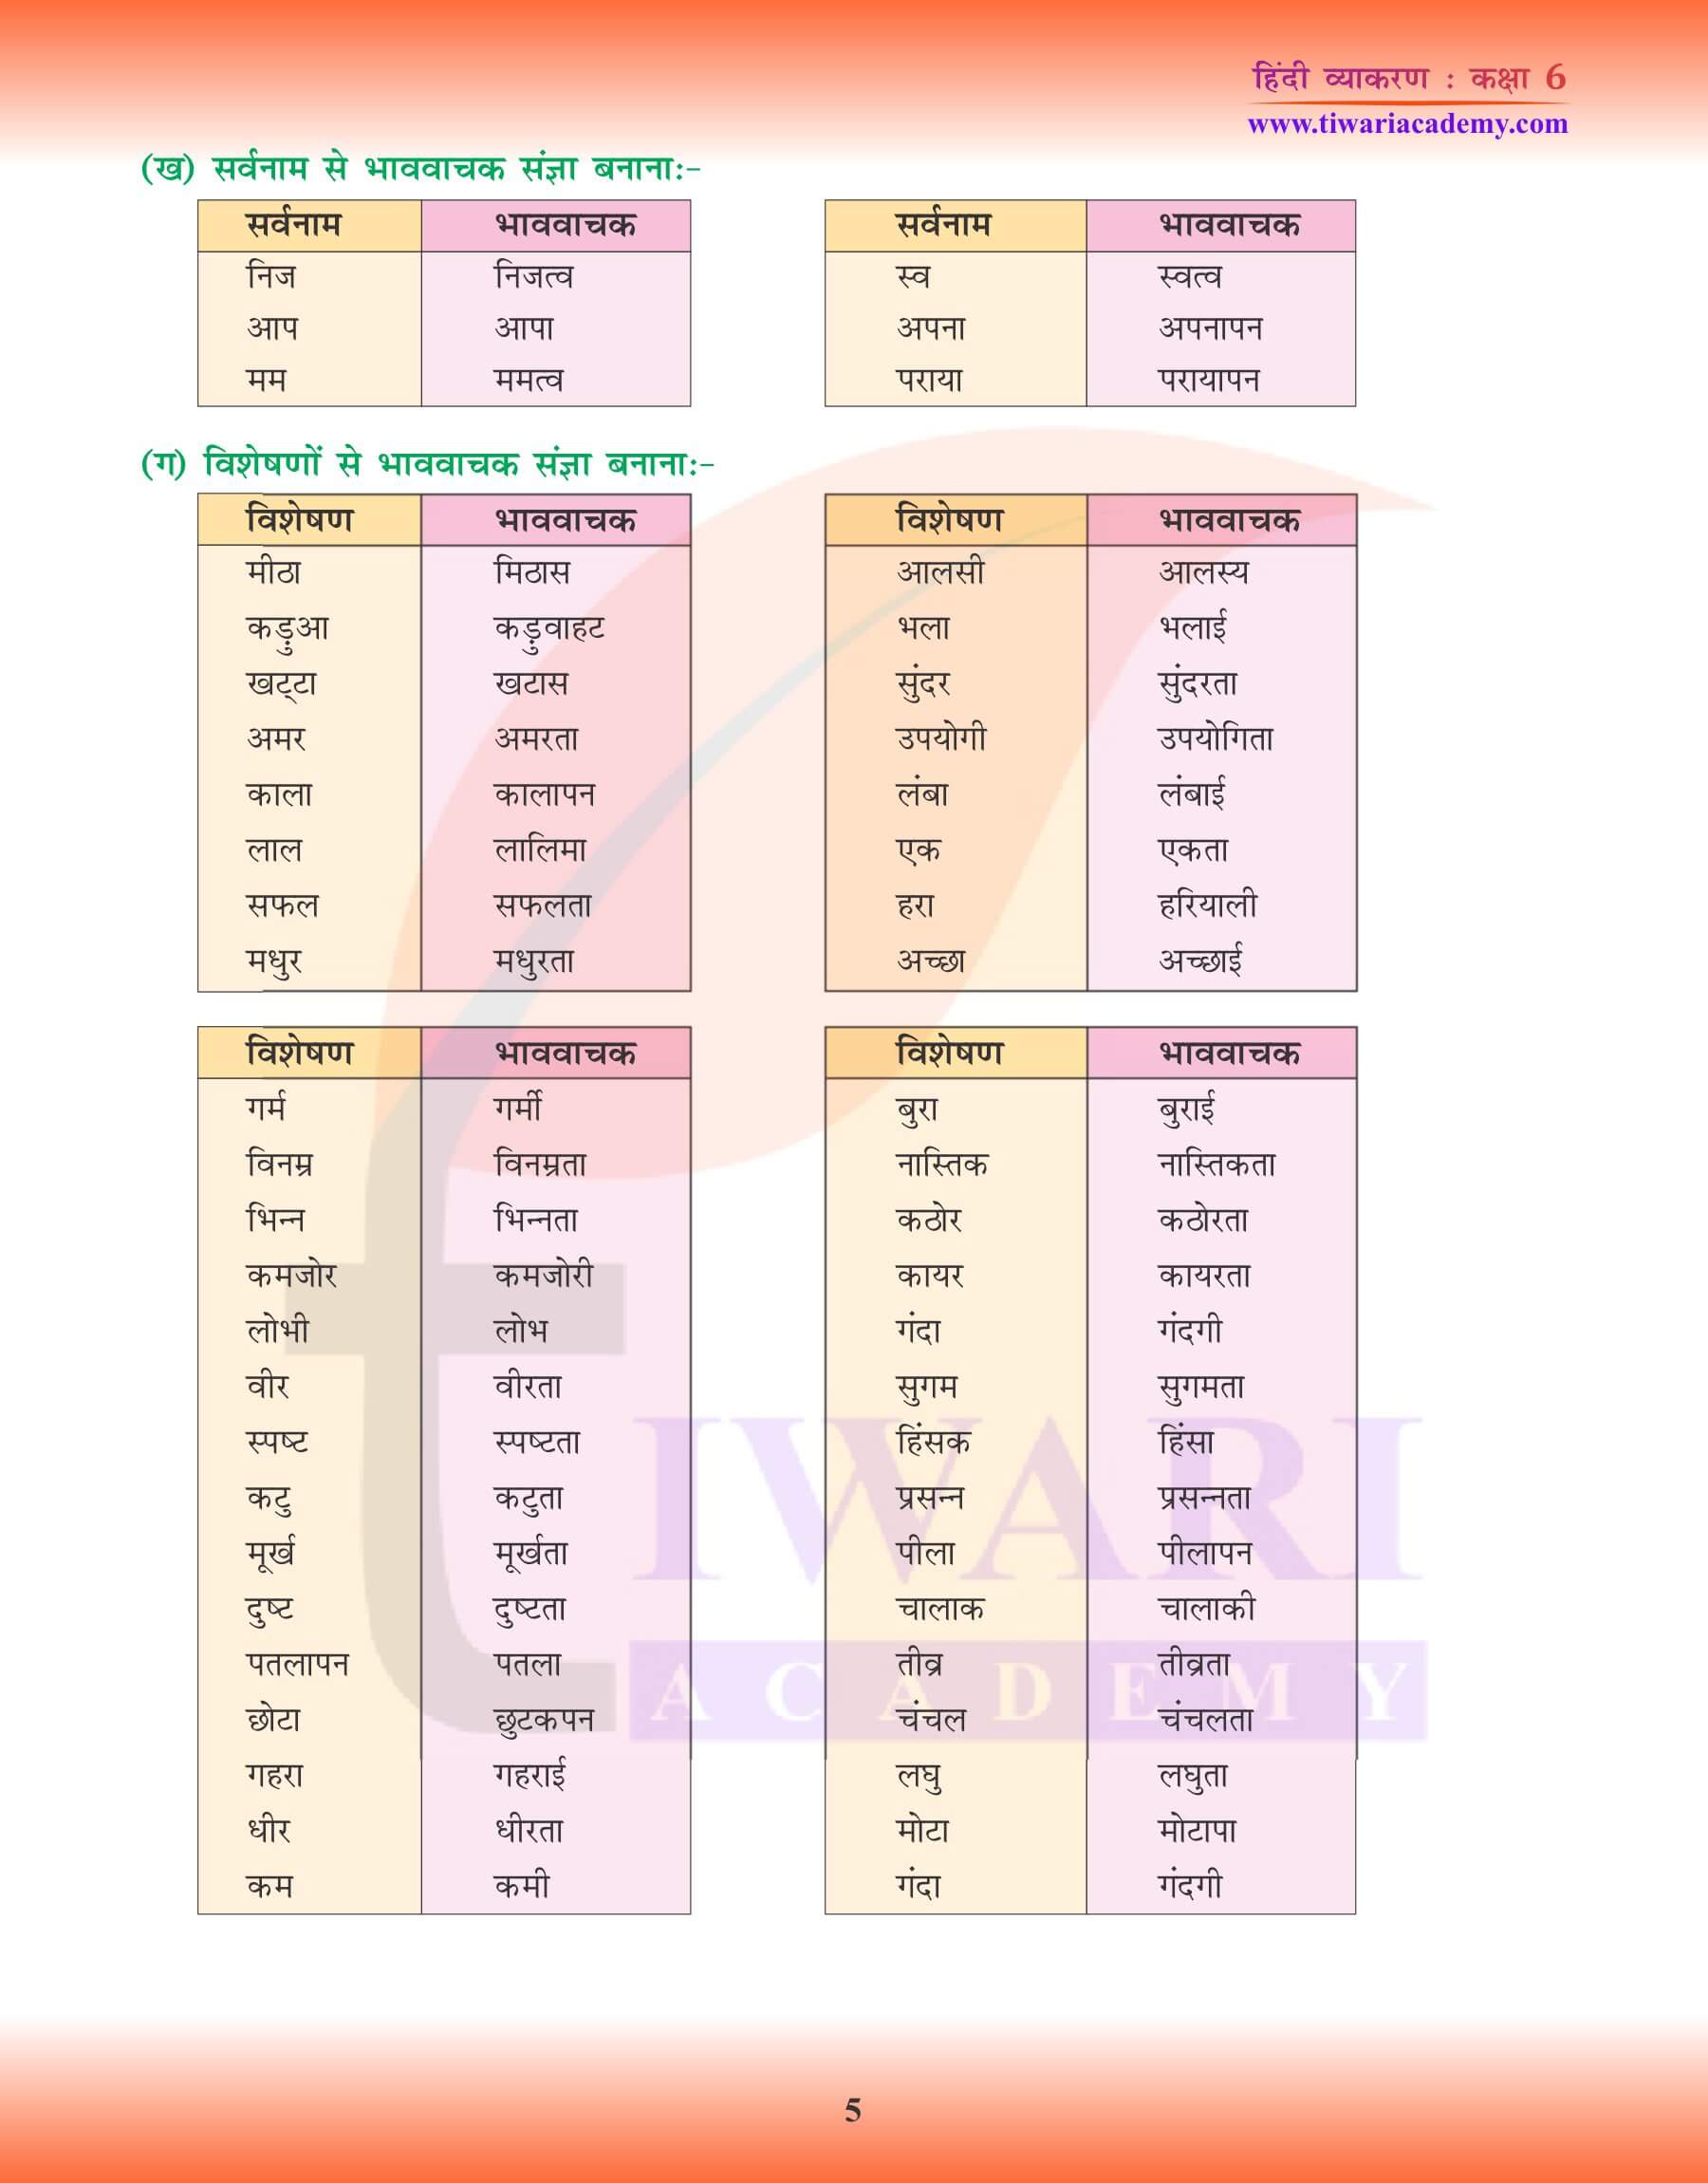 कक्षा 6 हिंदी व्याकरण संज्ञा के उदाहरण